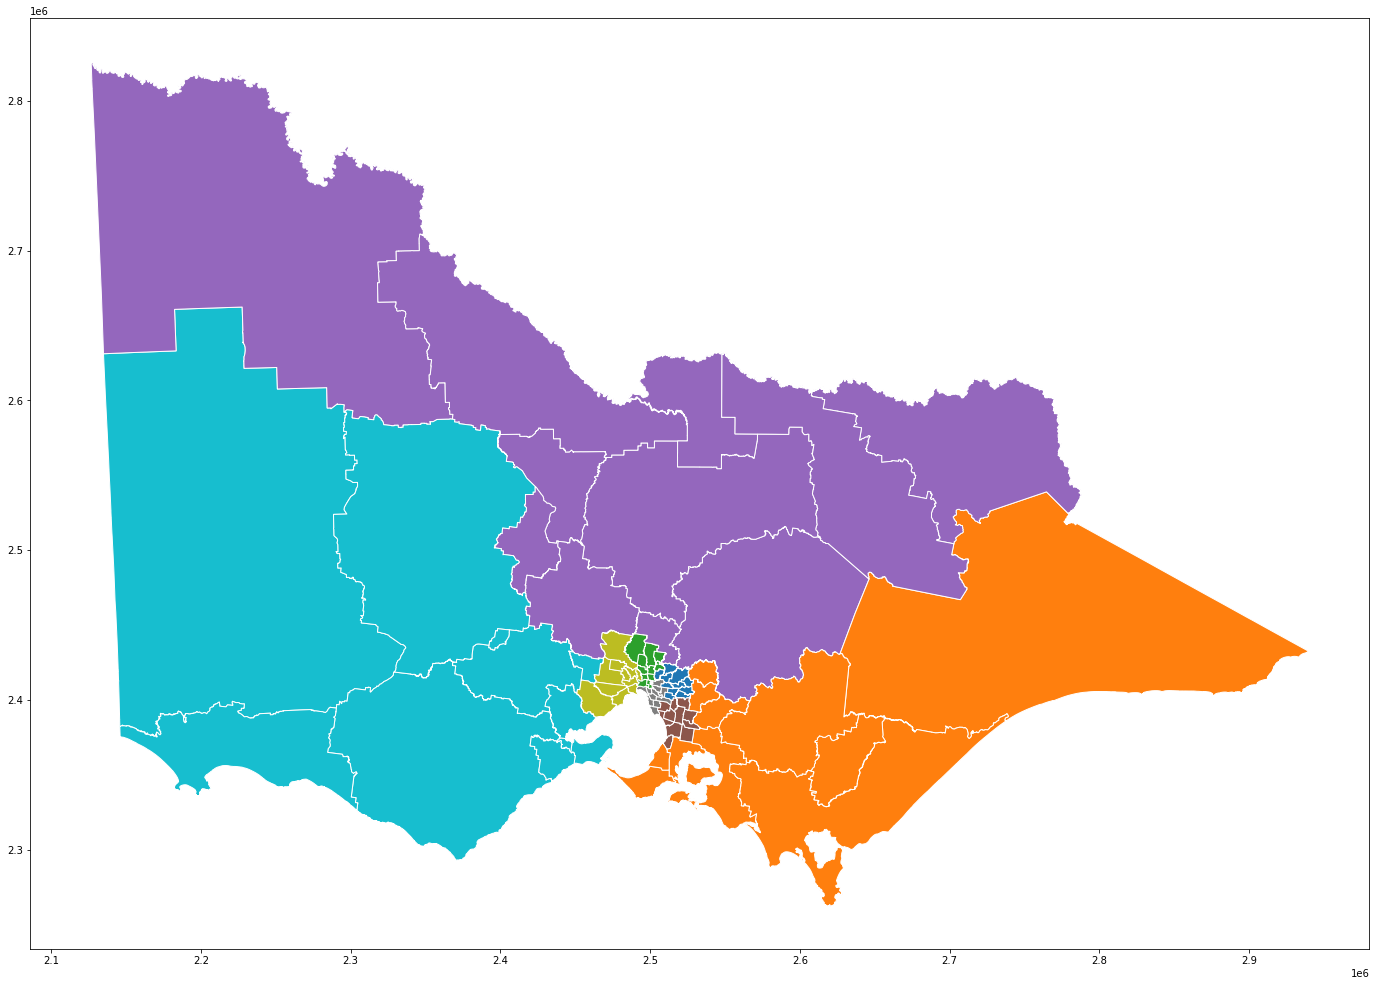 Plot of Victoria's electorates.